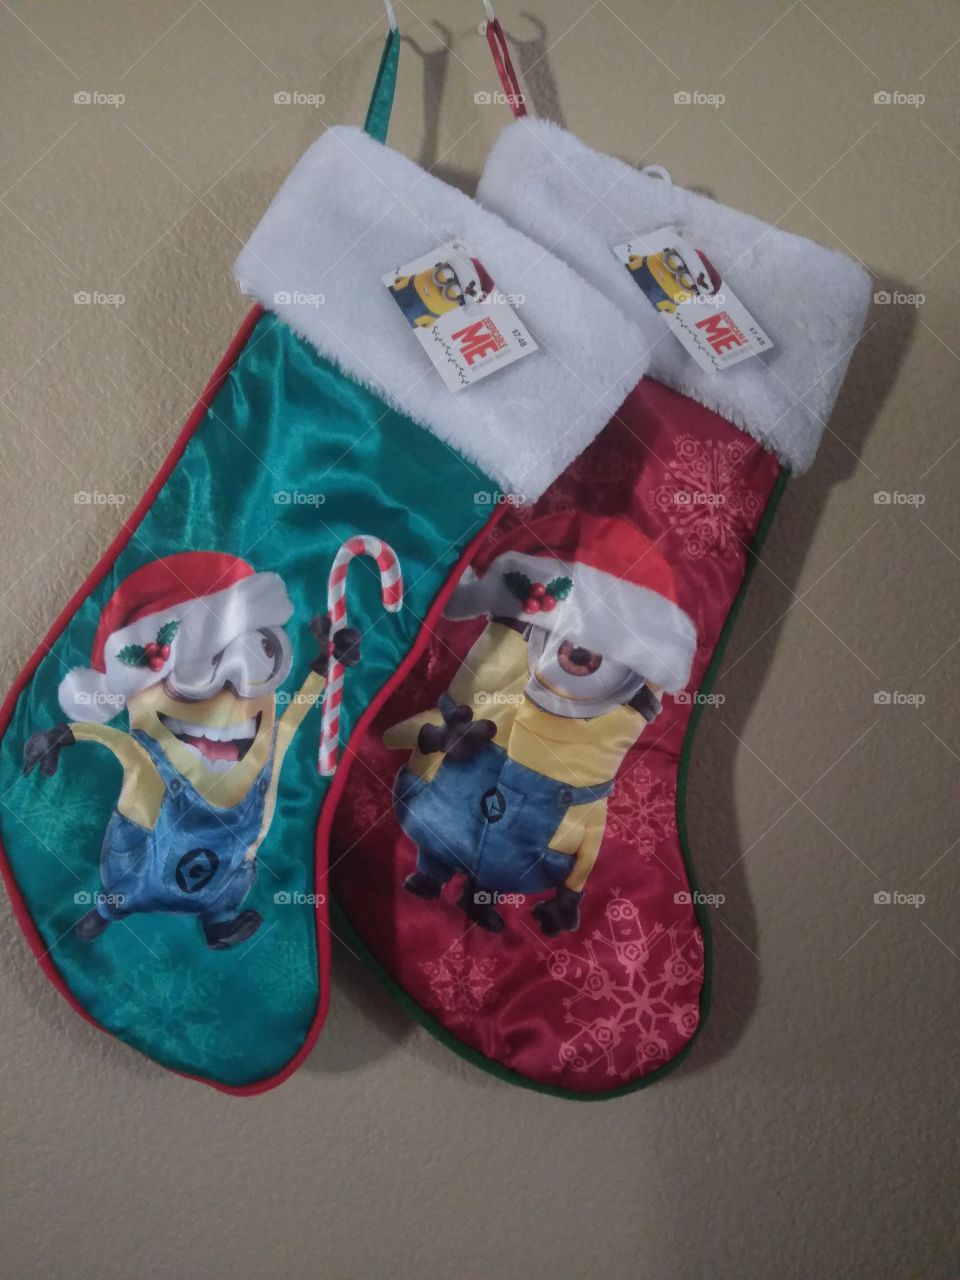 Minion stockings hung for boys for Christmas.